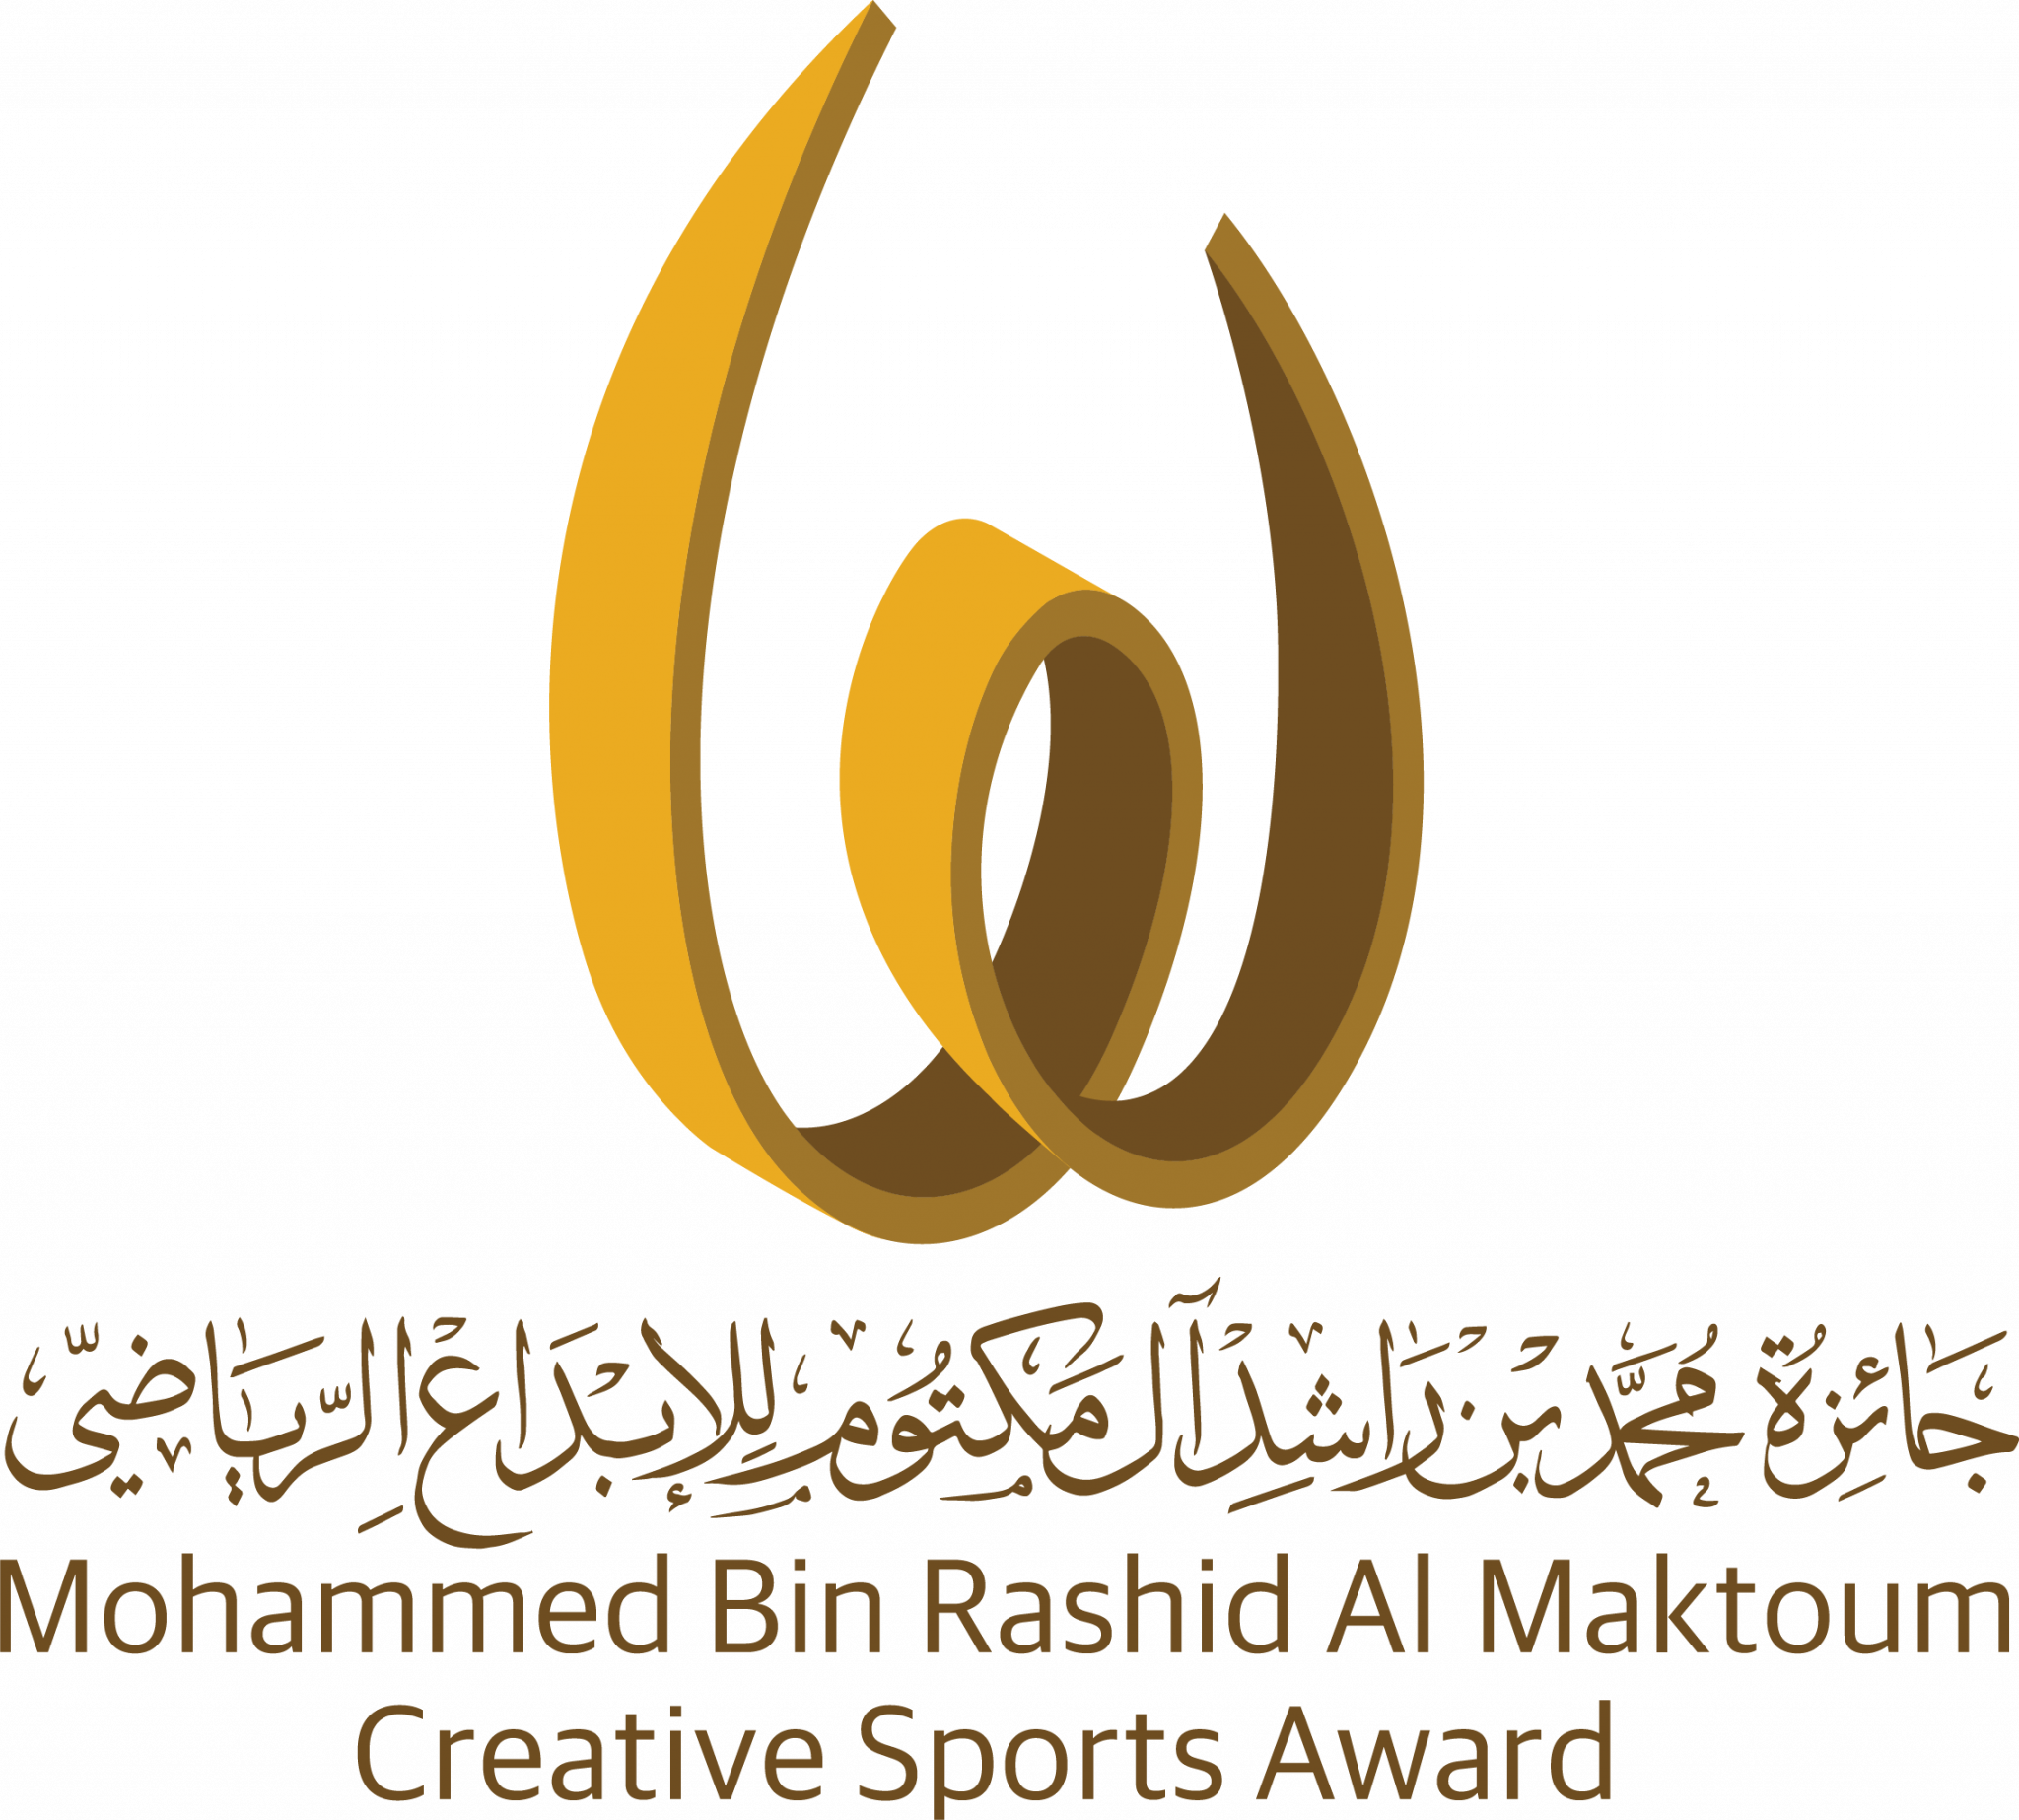 Registration has opened for the 11th Mohammed Bin Rashid Al Maktoum Creative Sports Award ©MBRCSA 